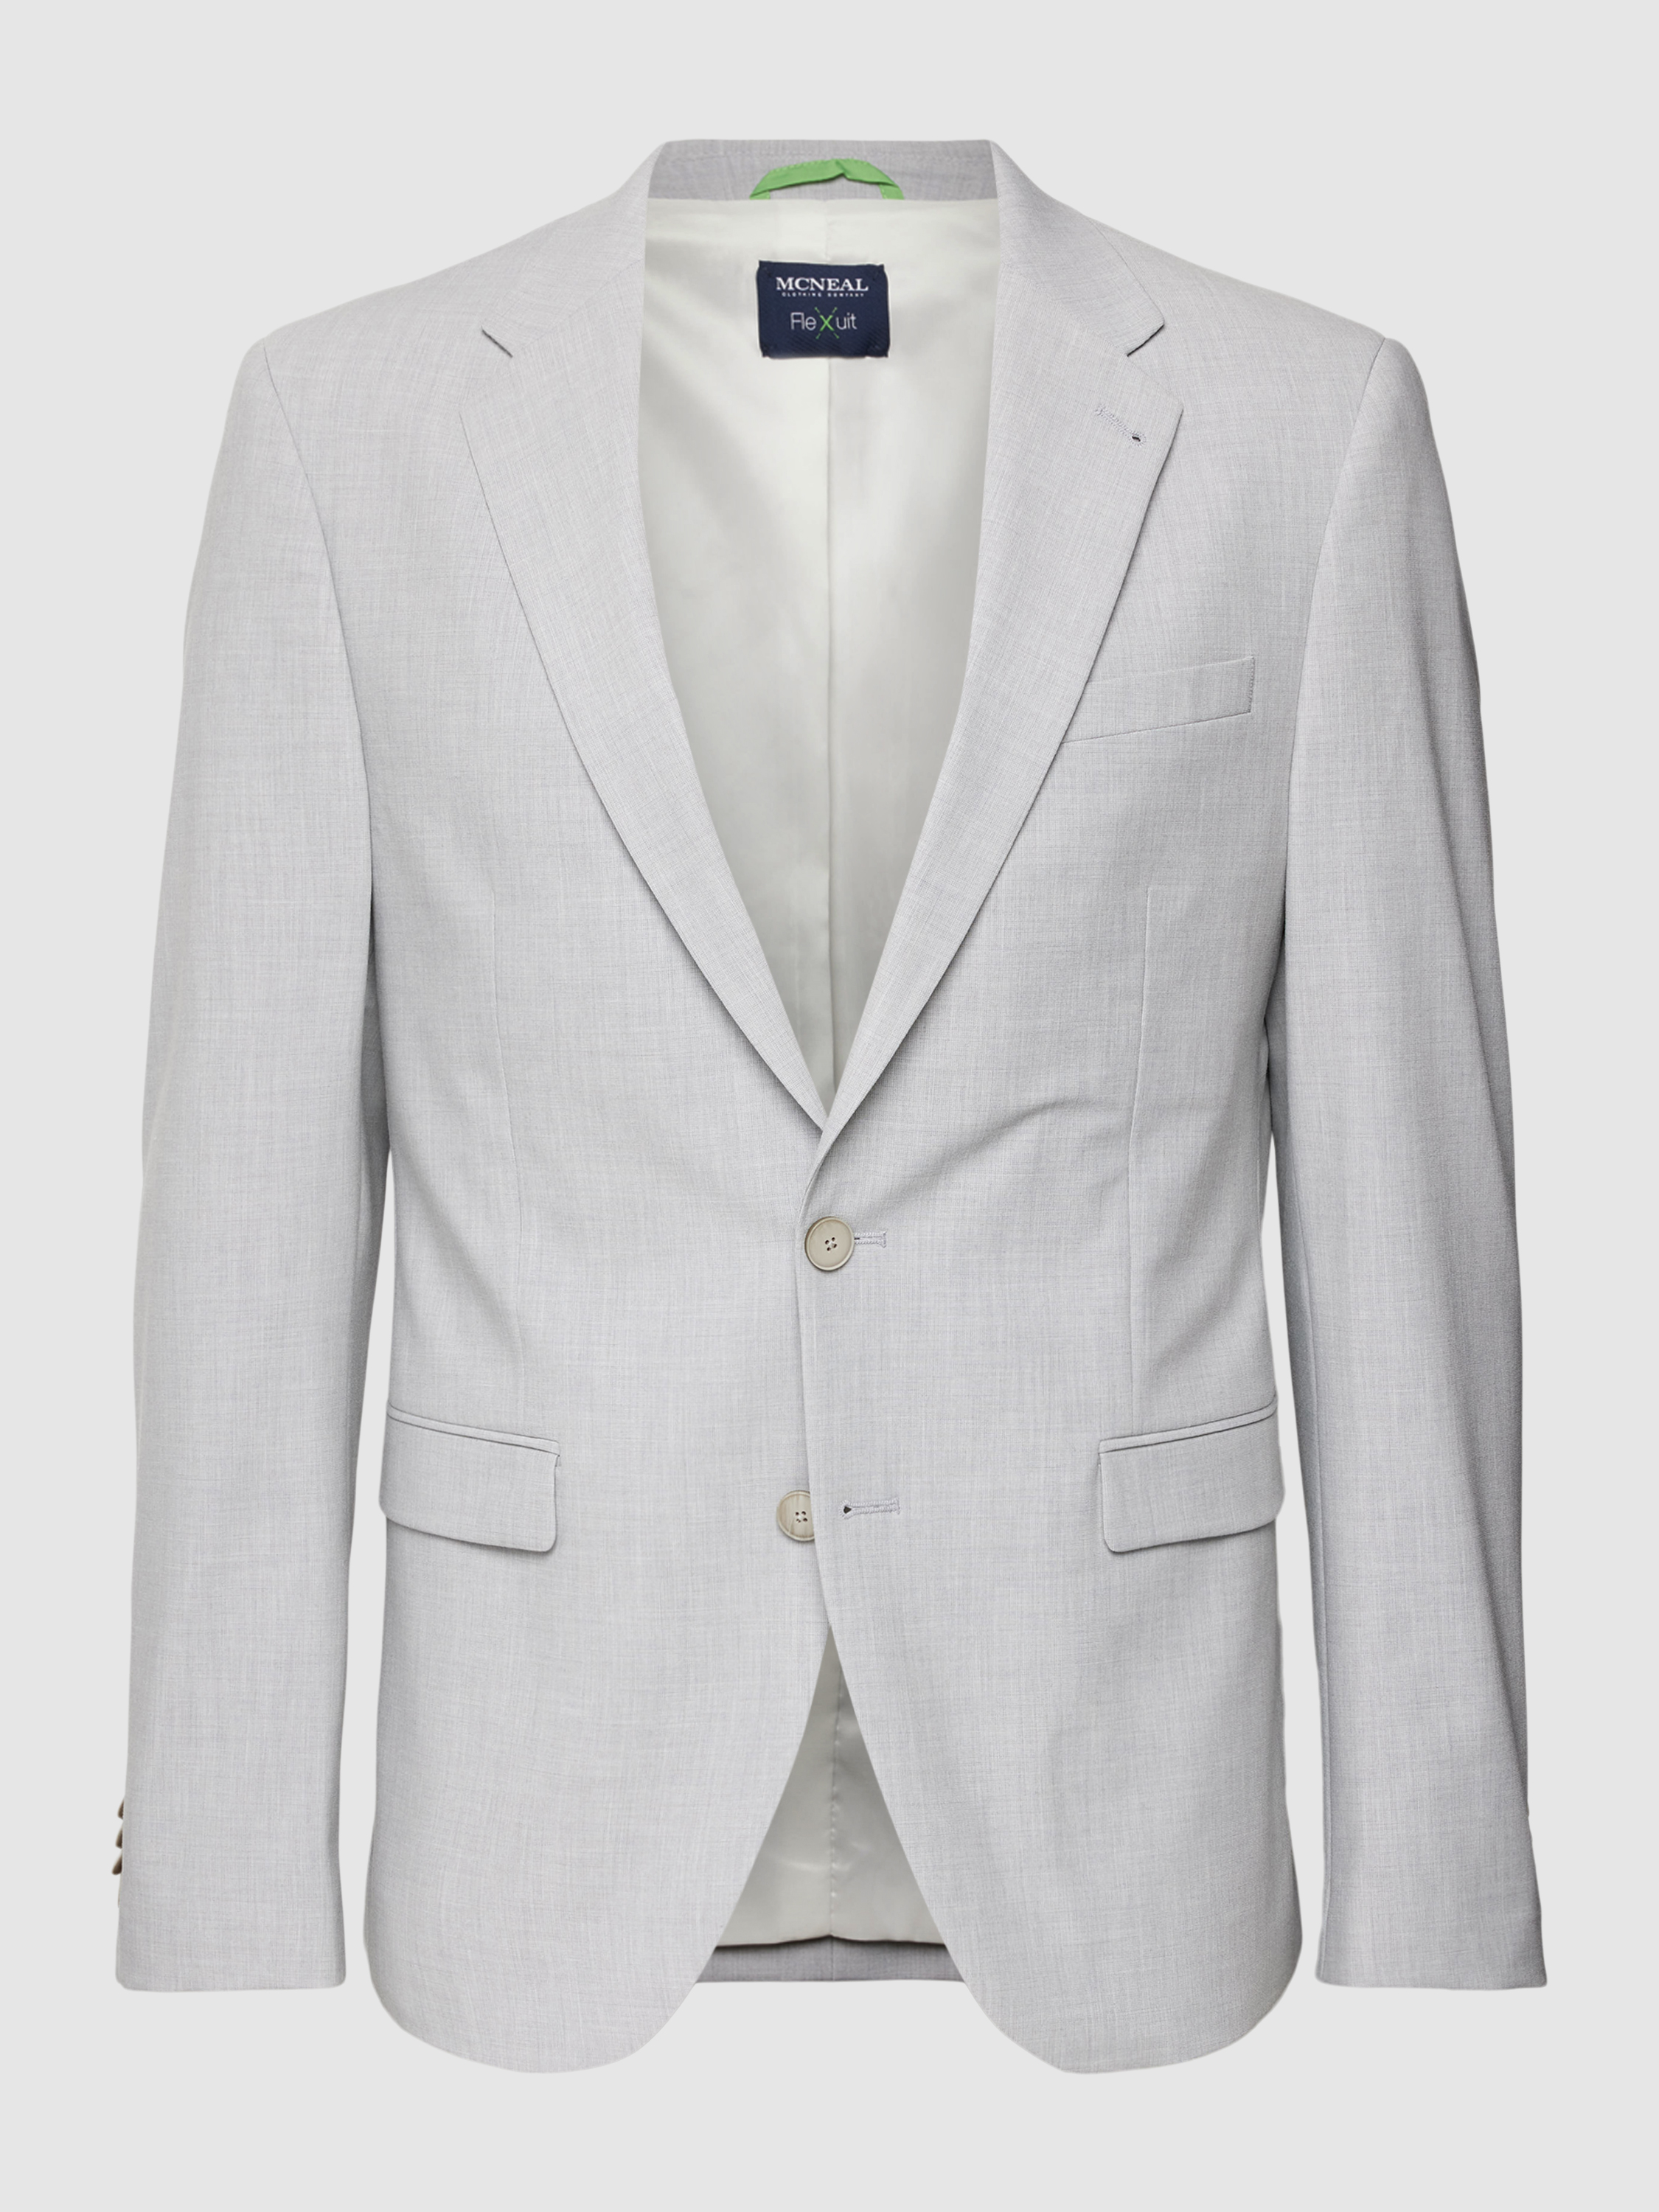 Пиджак мужской McNeal 1726235 серый 50 (доставка из-за рубежа)